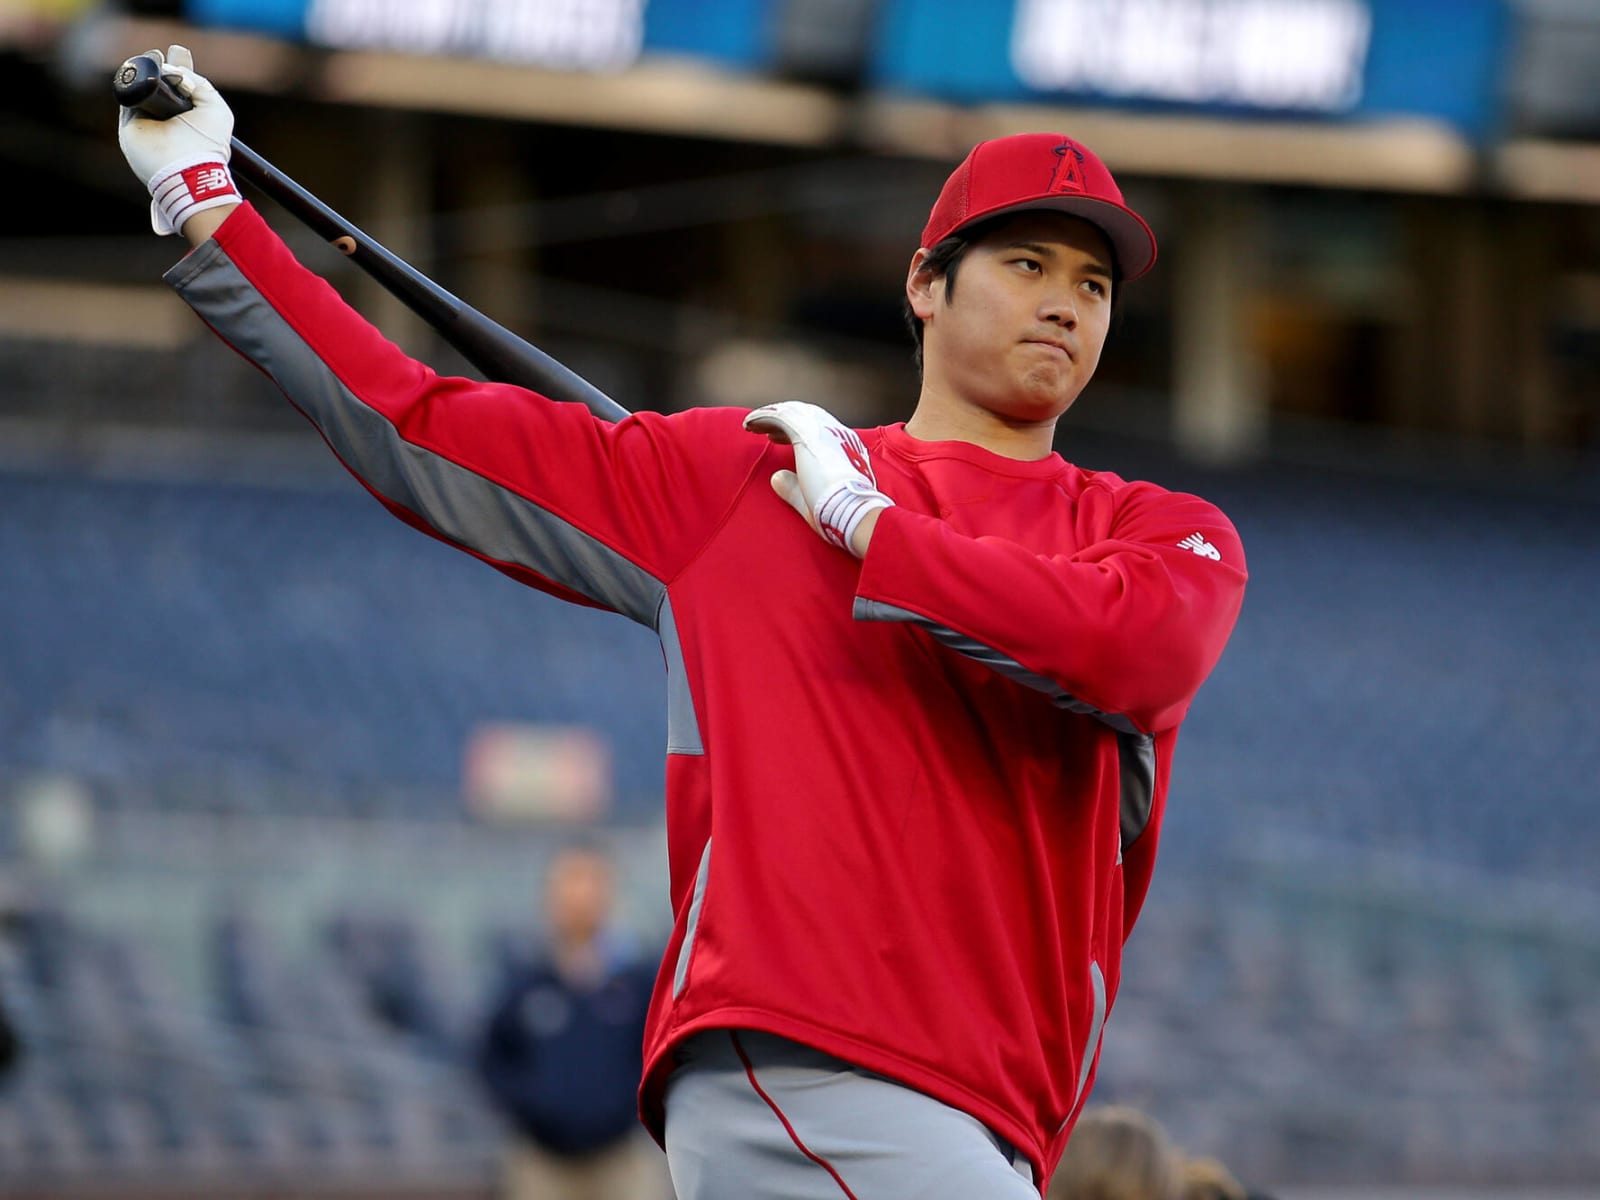 Is Yankees' Aaron Judge recruiting Angels' Shohei Ohtani?